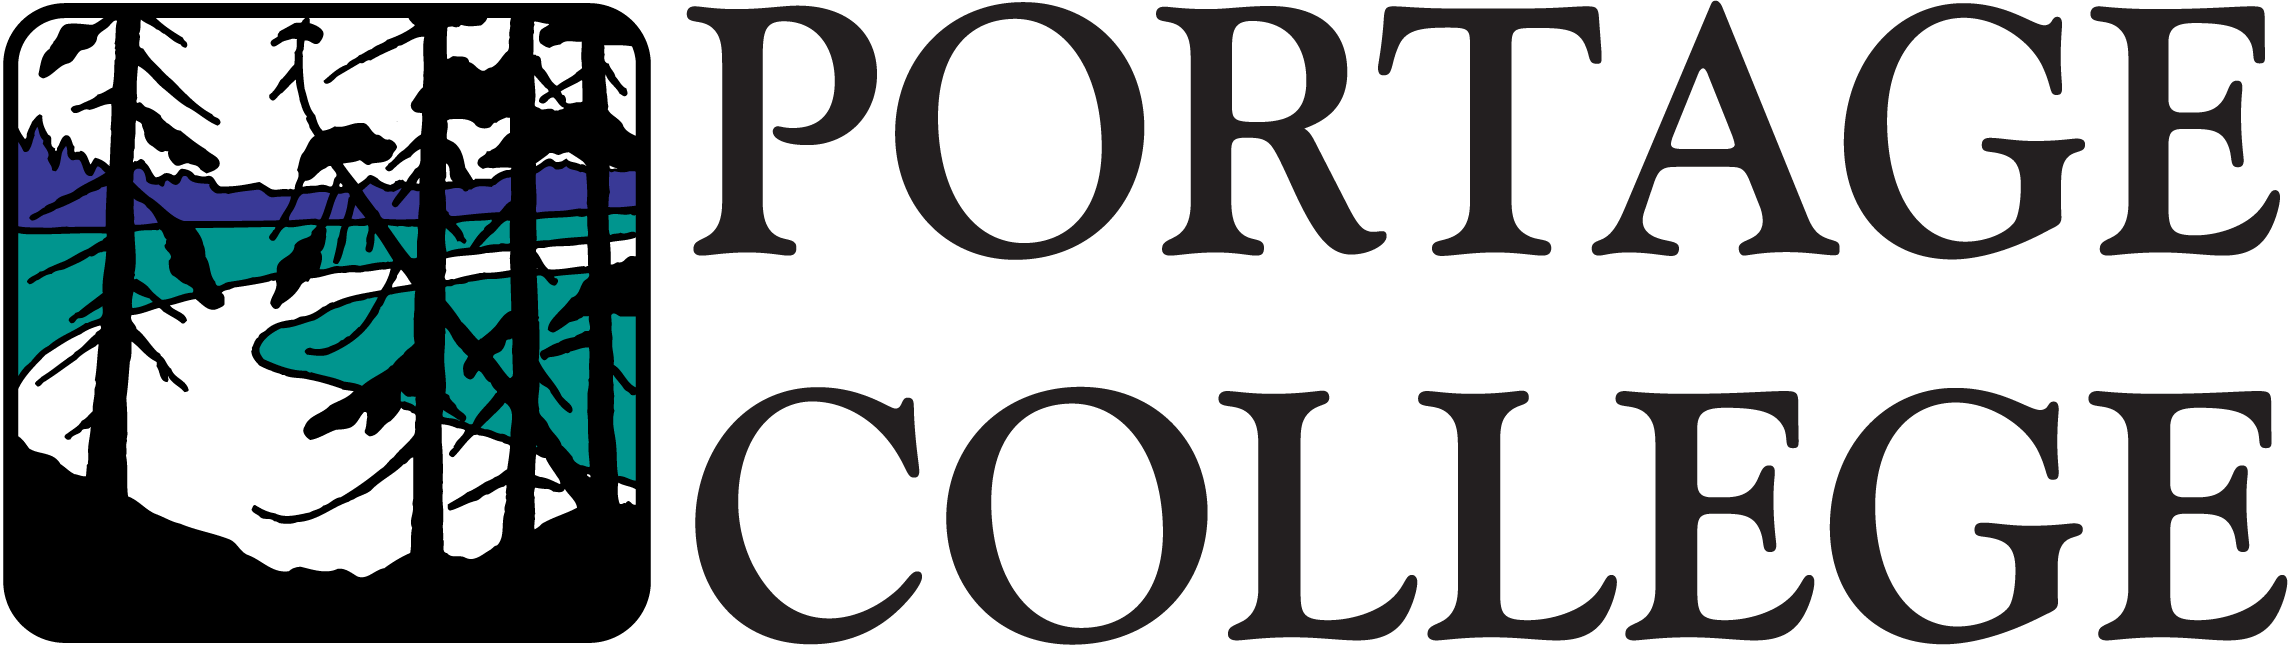 Portage College - Pop Up Banner.png